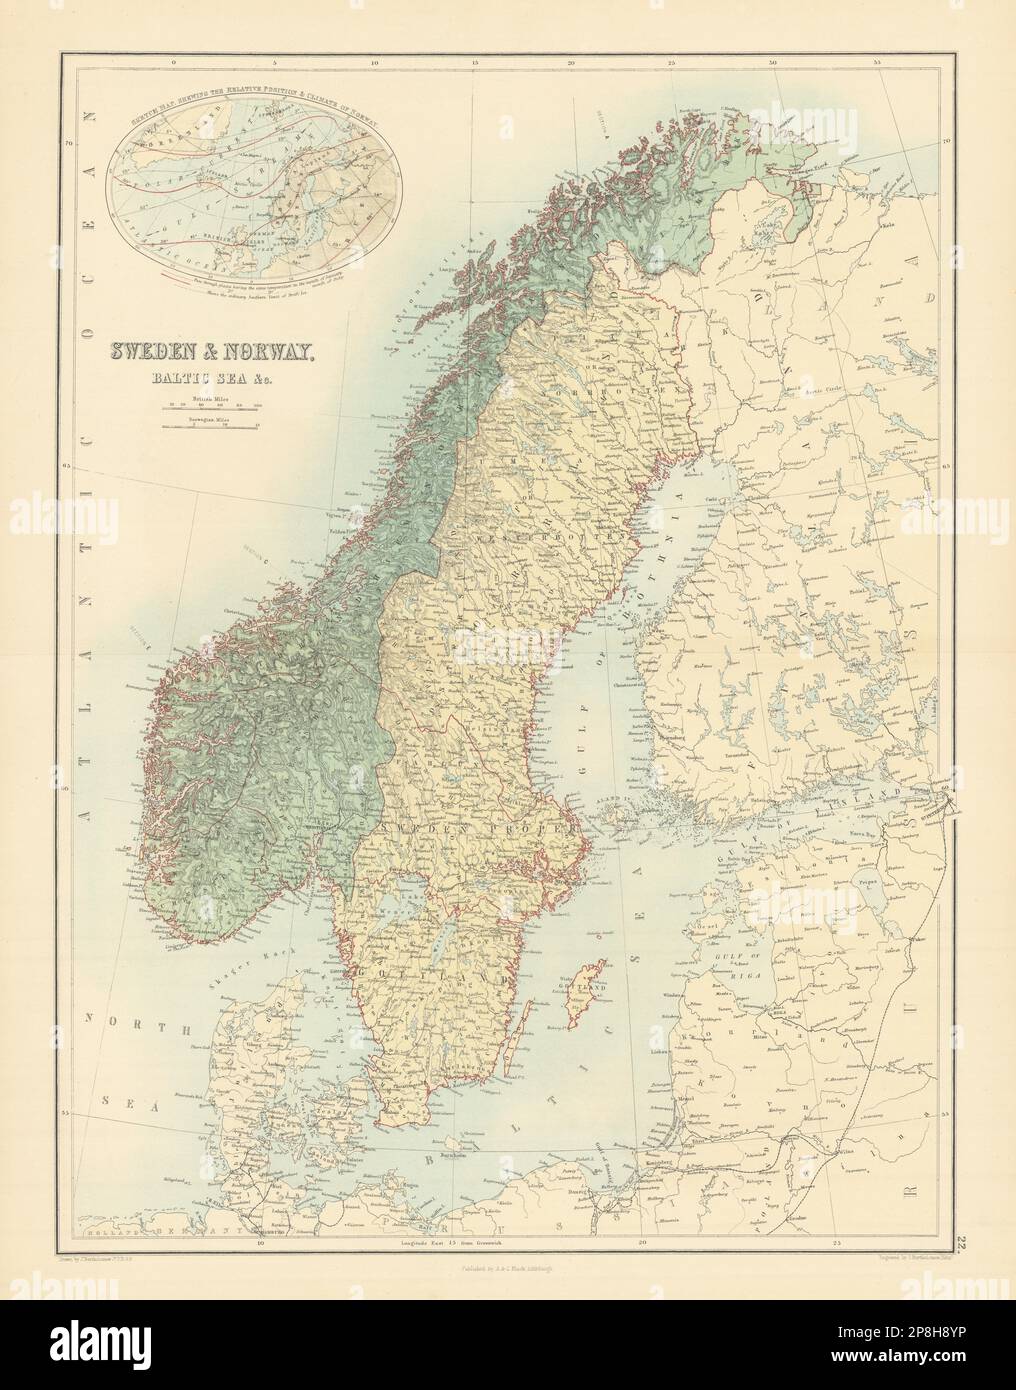 Sweden, Norway & the Baltic Sea. Scandinavia. BARTHOLOMEW 1862 old antique map Stock Photo